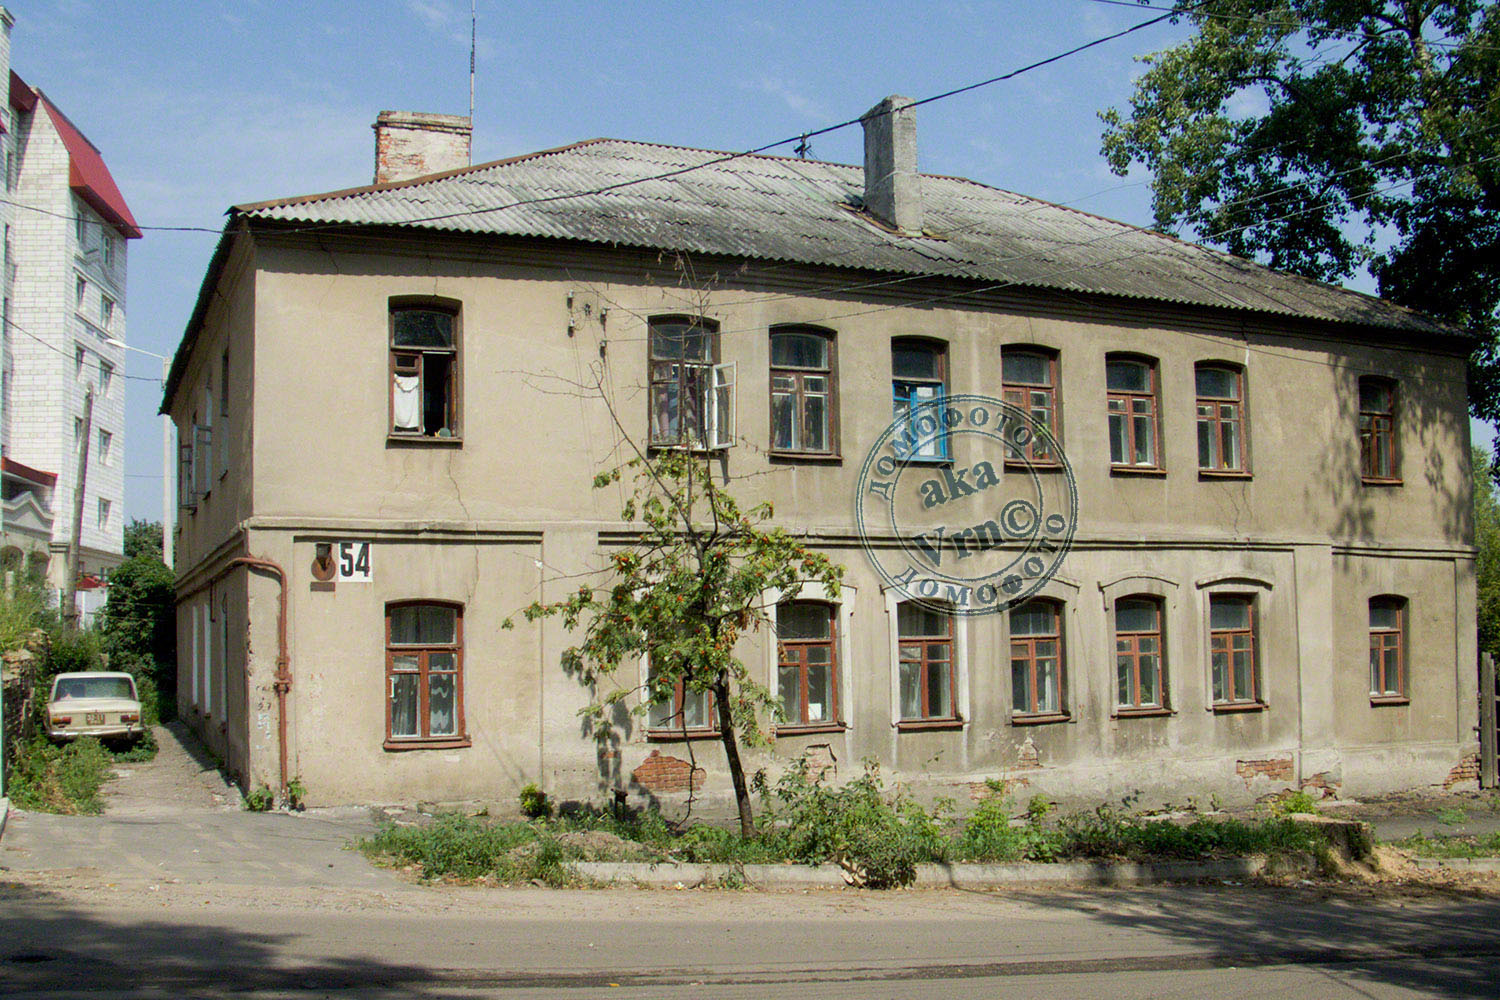 Woroneż, Улица Коммунаров, 54